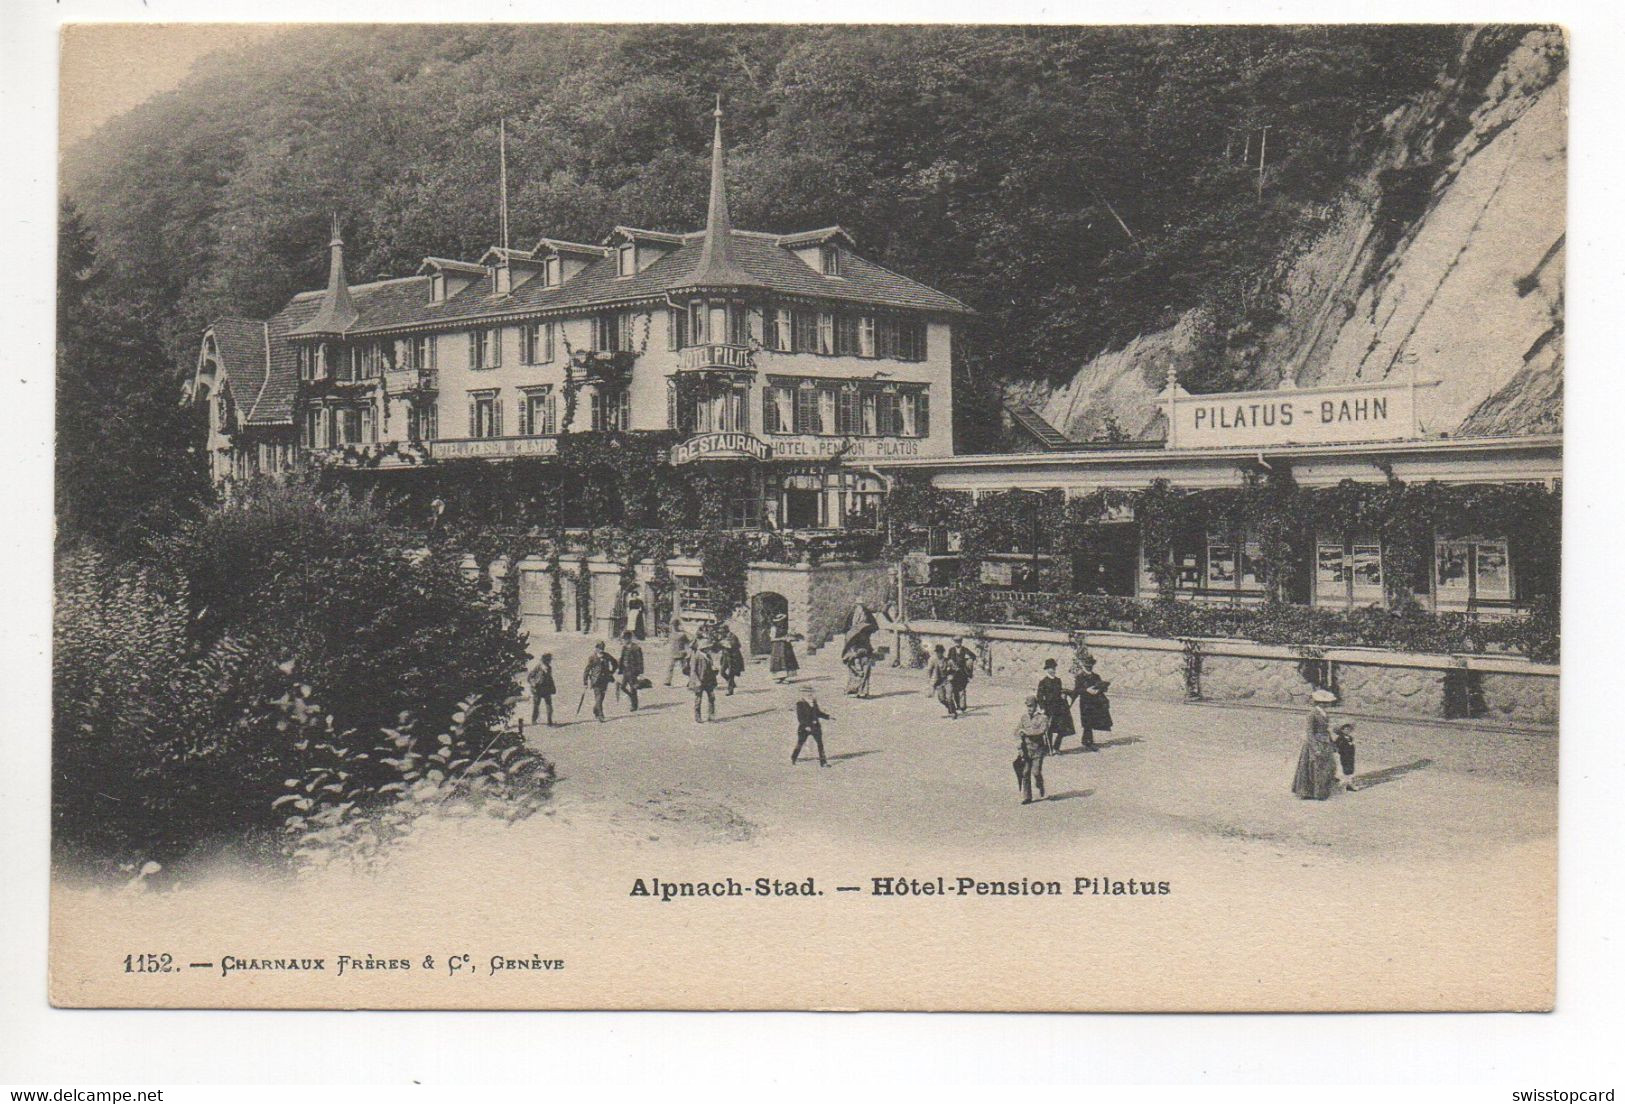 ALPNACHSTAD Hotel-Pension Pilatus Pilatus-Bahn - Alpnach